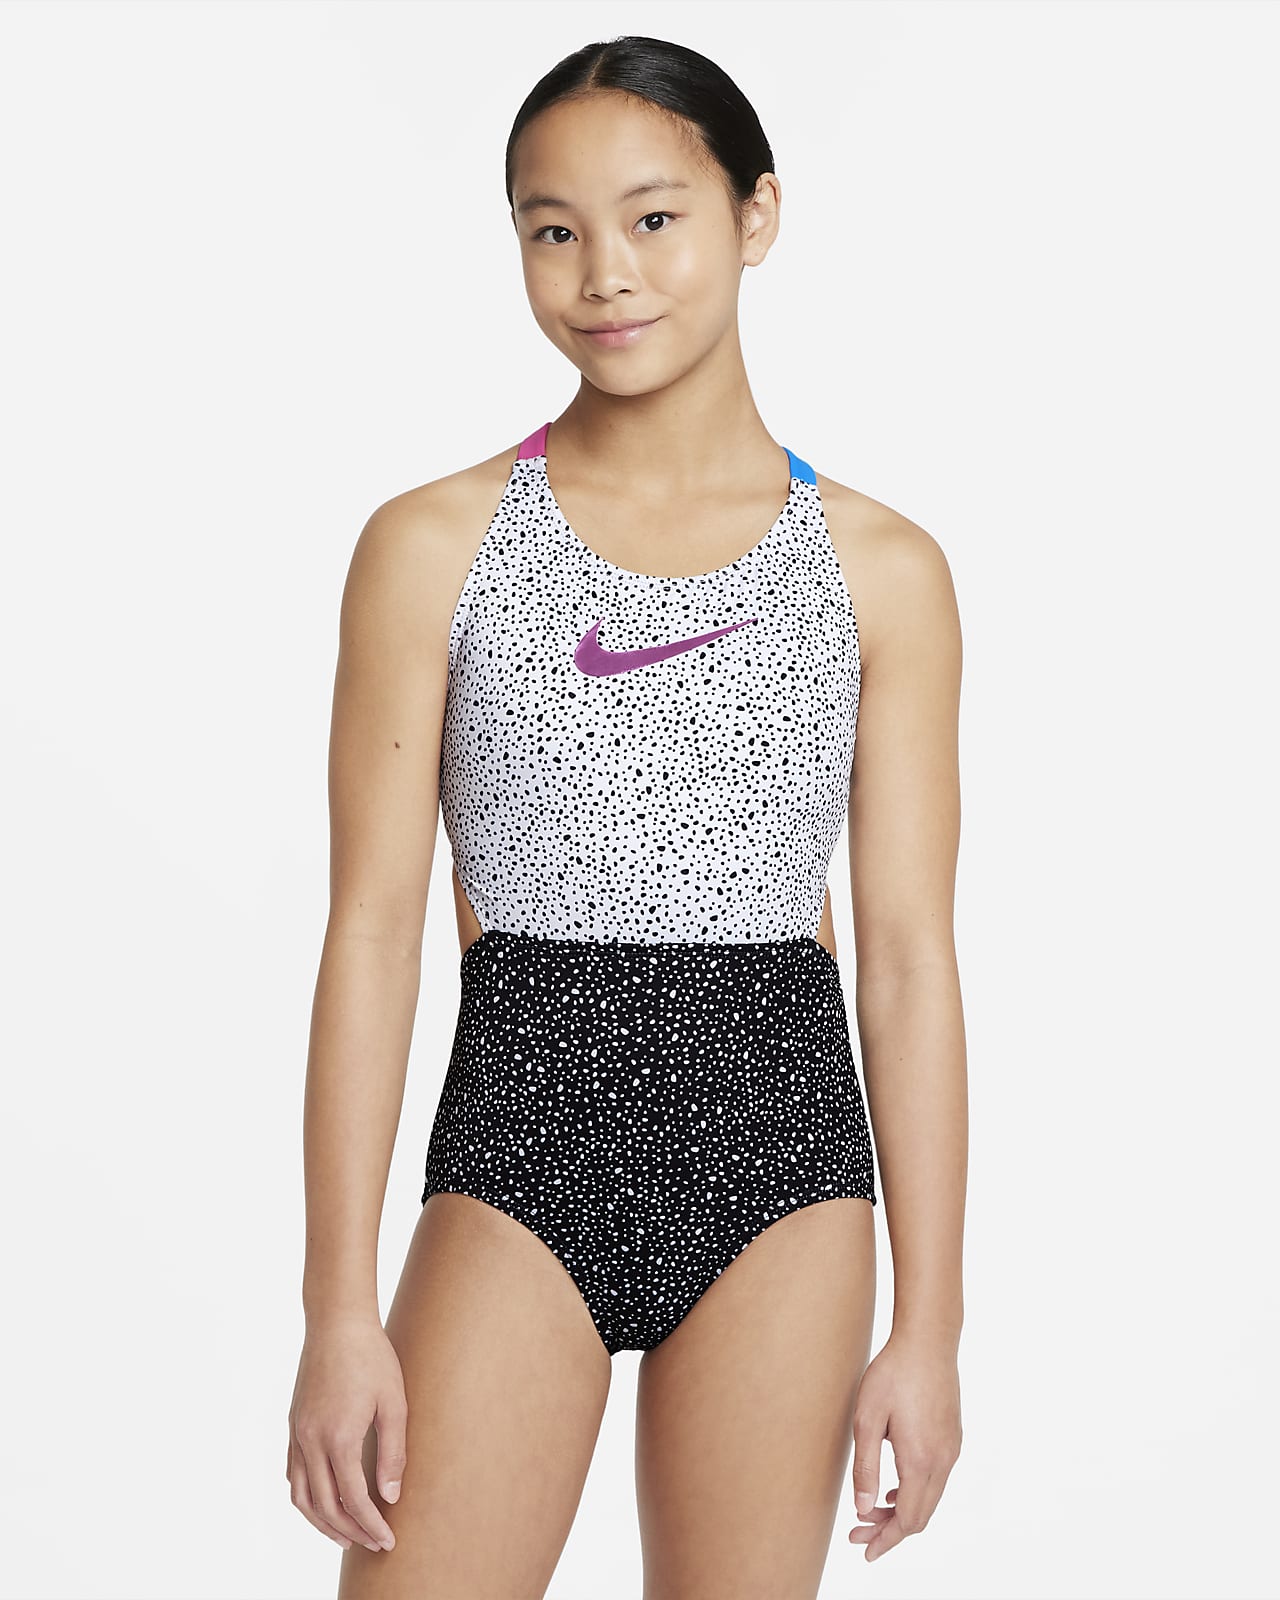 Nike Kids Girl Blue Crossback Midkini Swimsuit Set L10746 Size